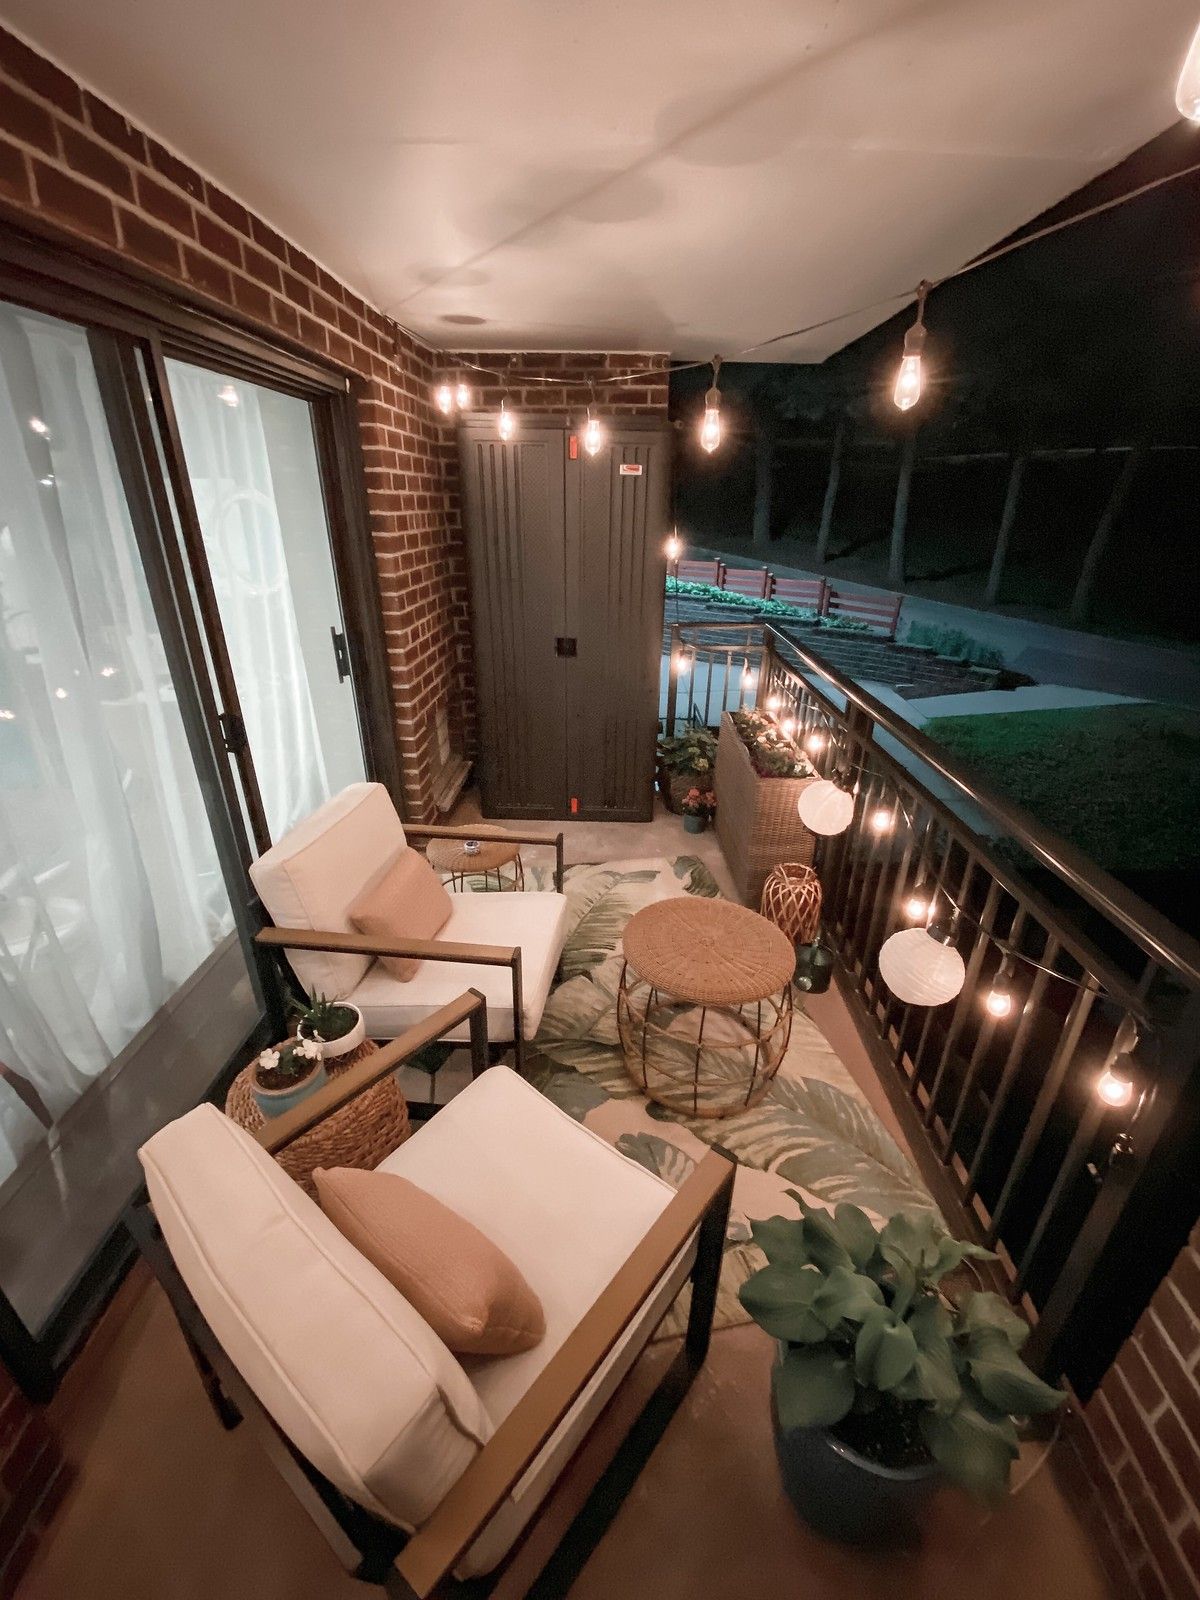 Apartment Balcony Decorating : Creative Ways to Amp Up Your Apartment Balcony Decor